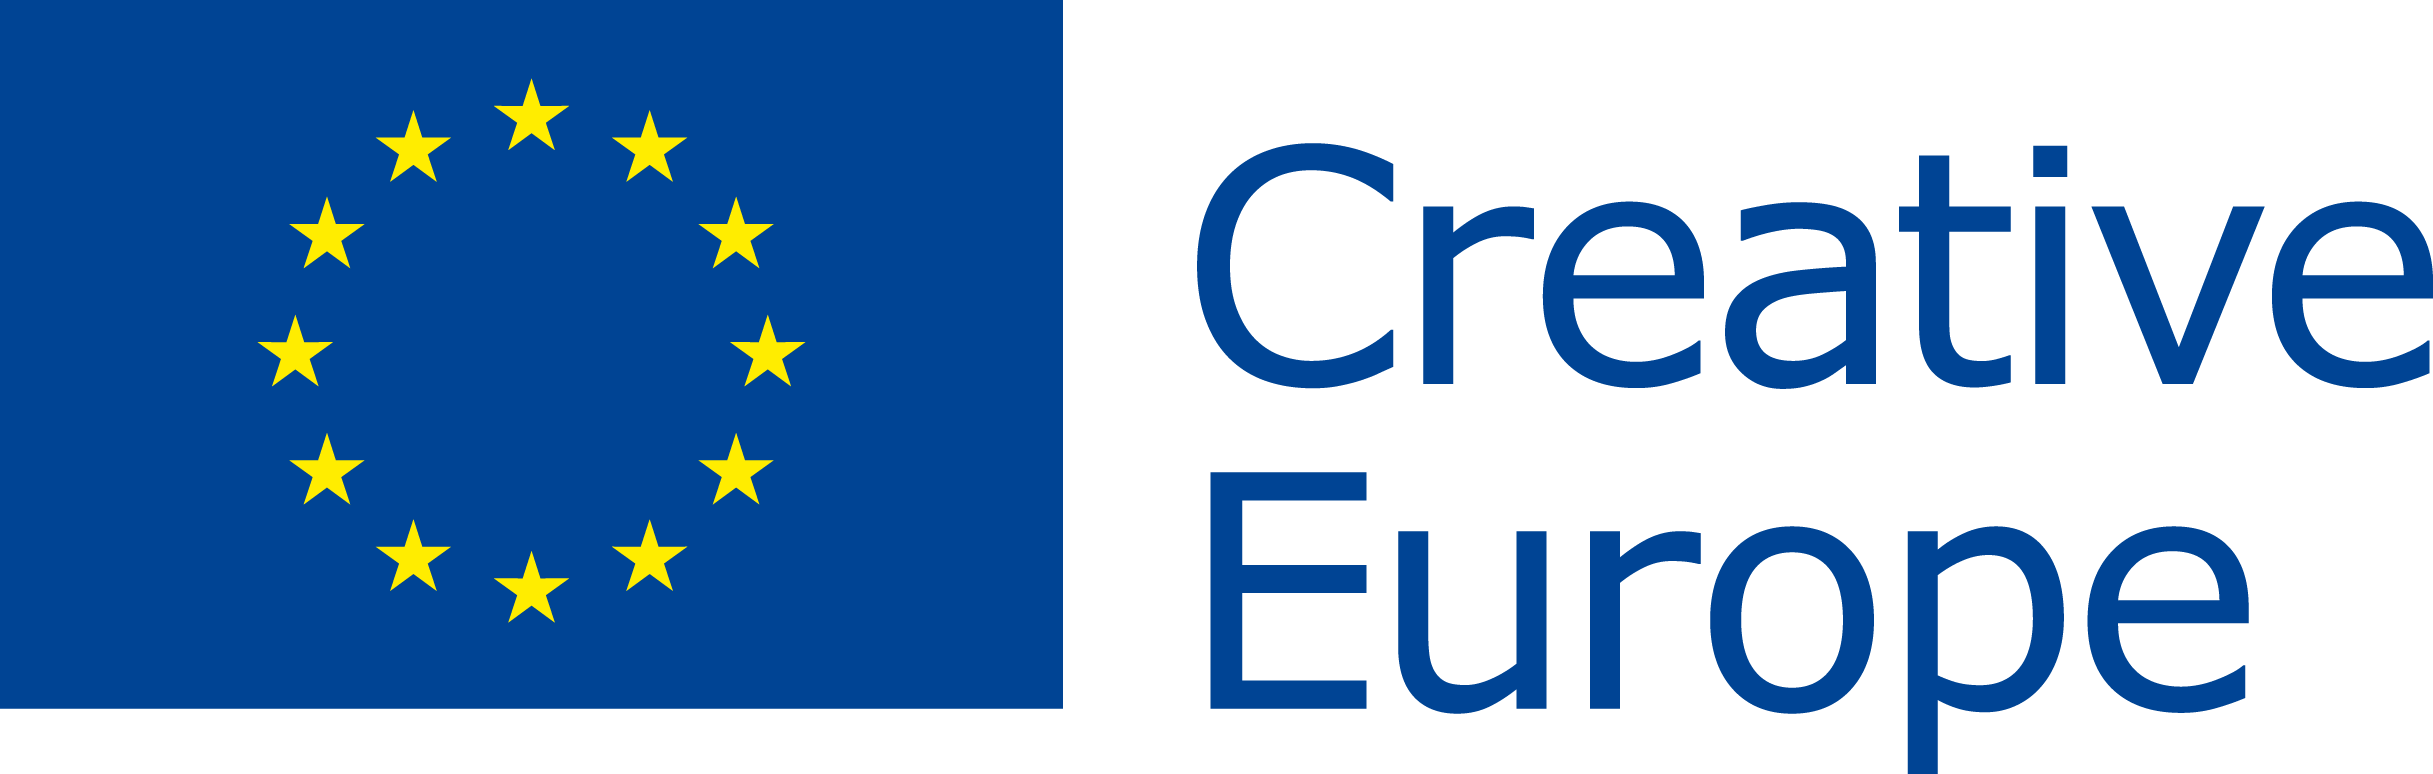 Europe Creative